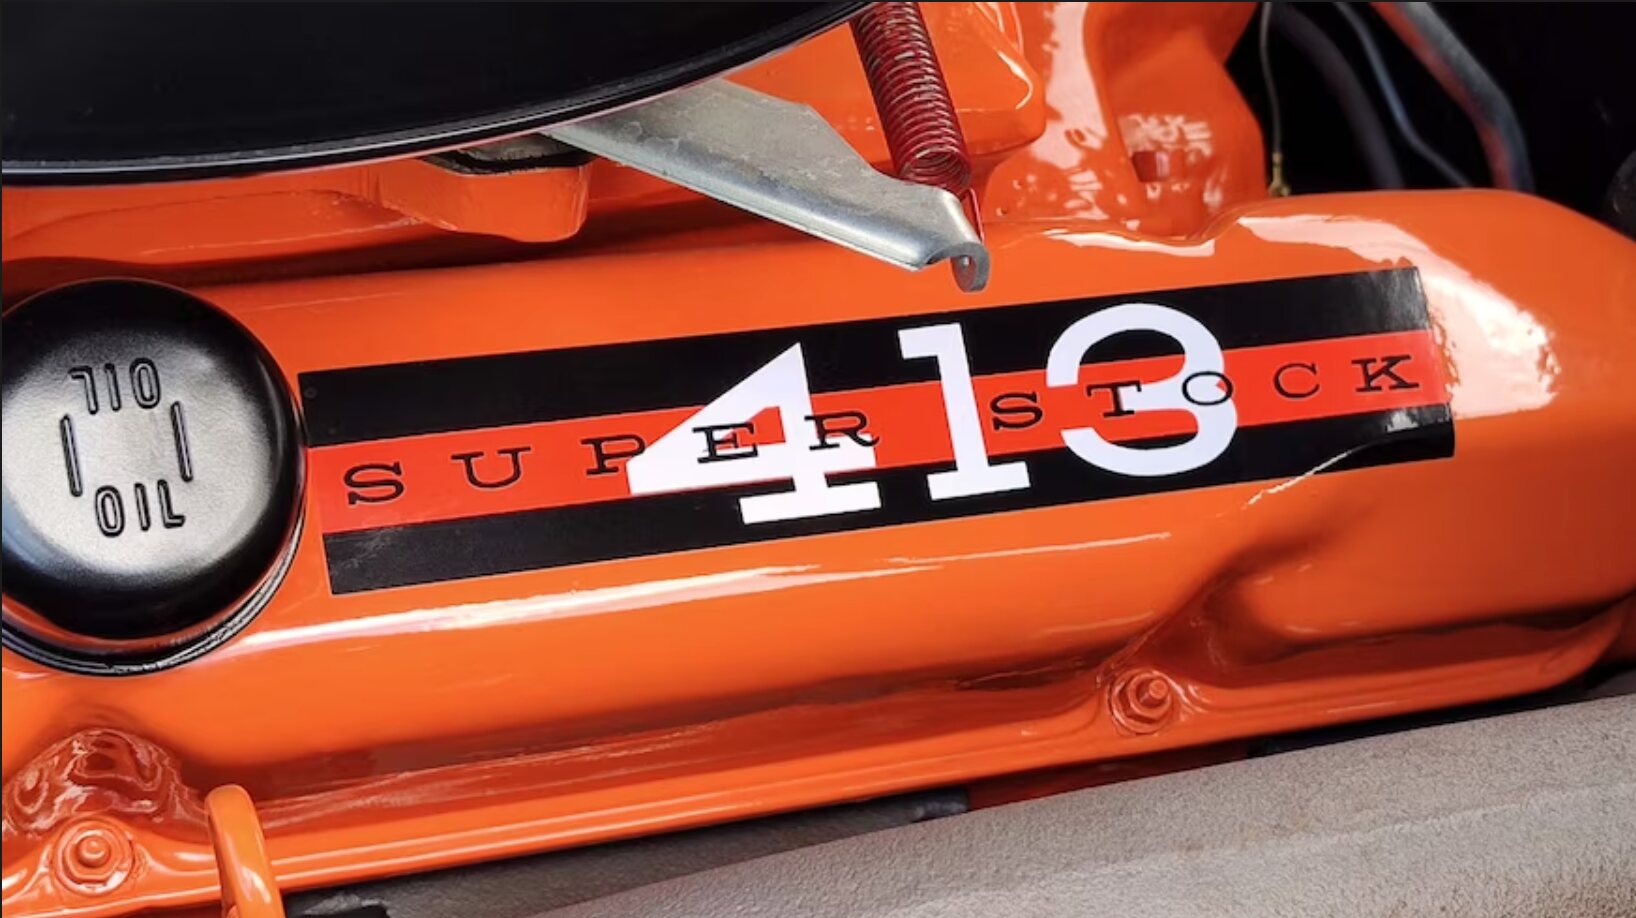 close up image of the orange Super Stock 413 engine.